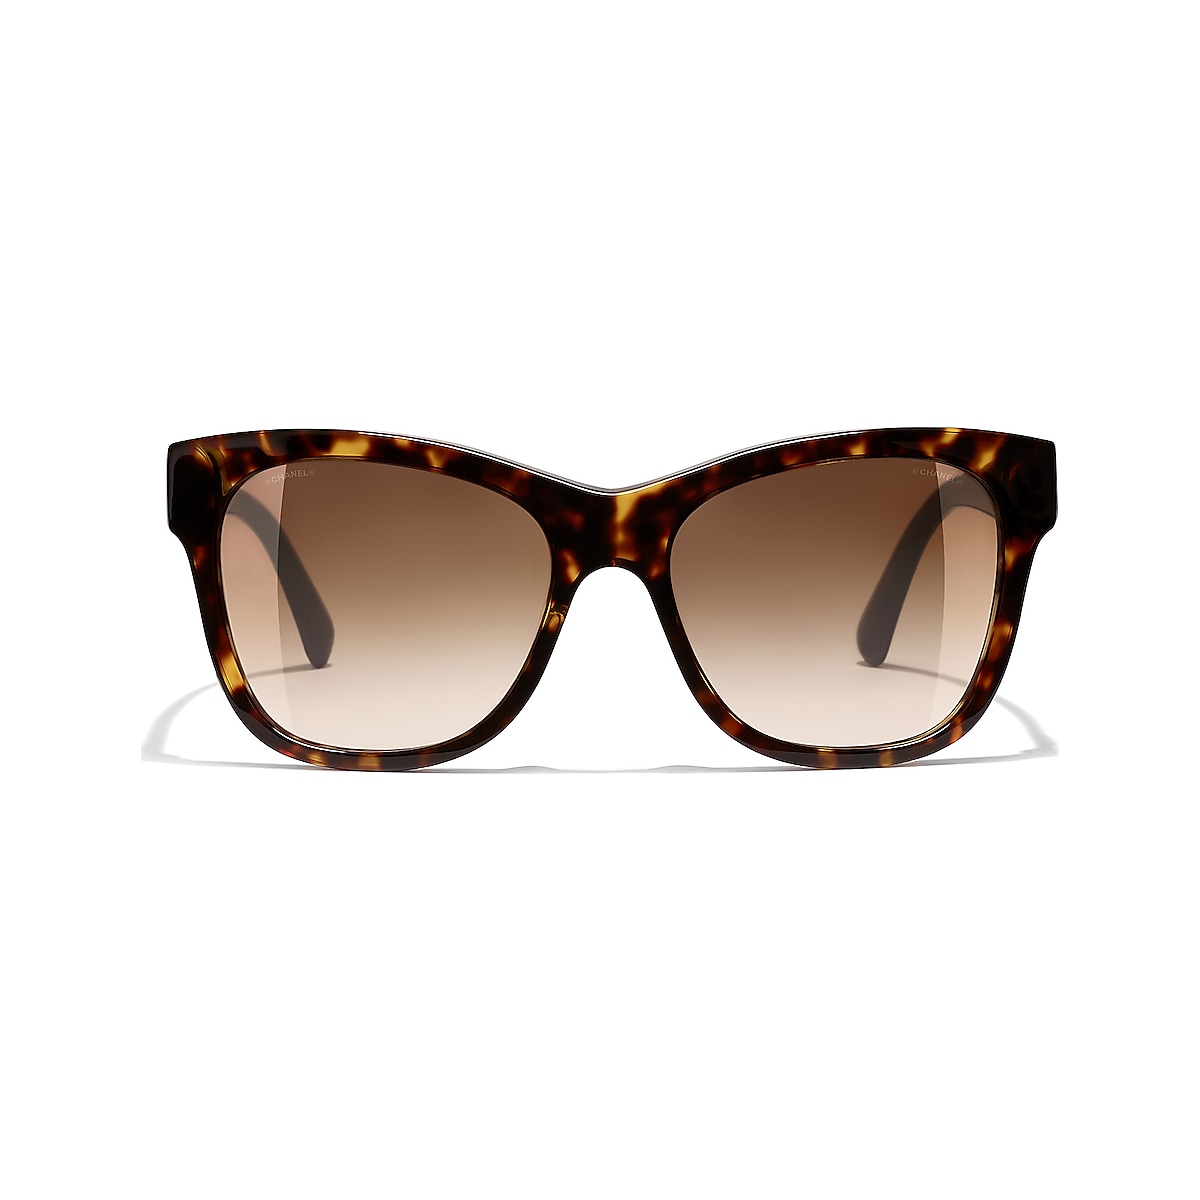 Chanel Square Sunglasses - Acetate, Dark Tortoise - Polarized - UV Protected - Women's Sunglasses - 5479 1425/S5